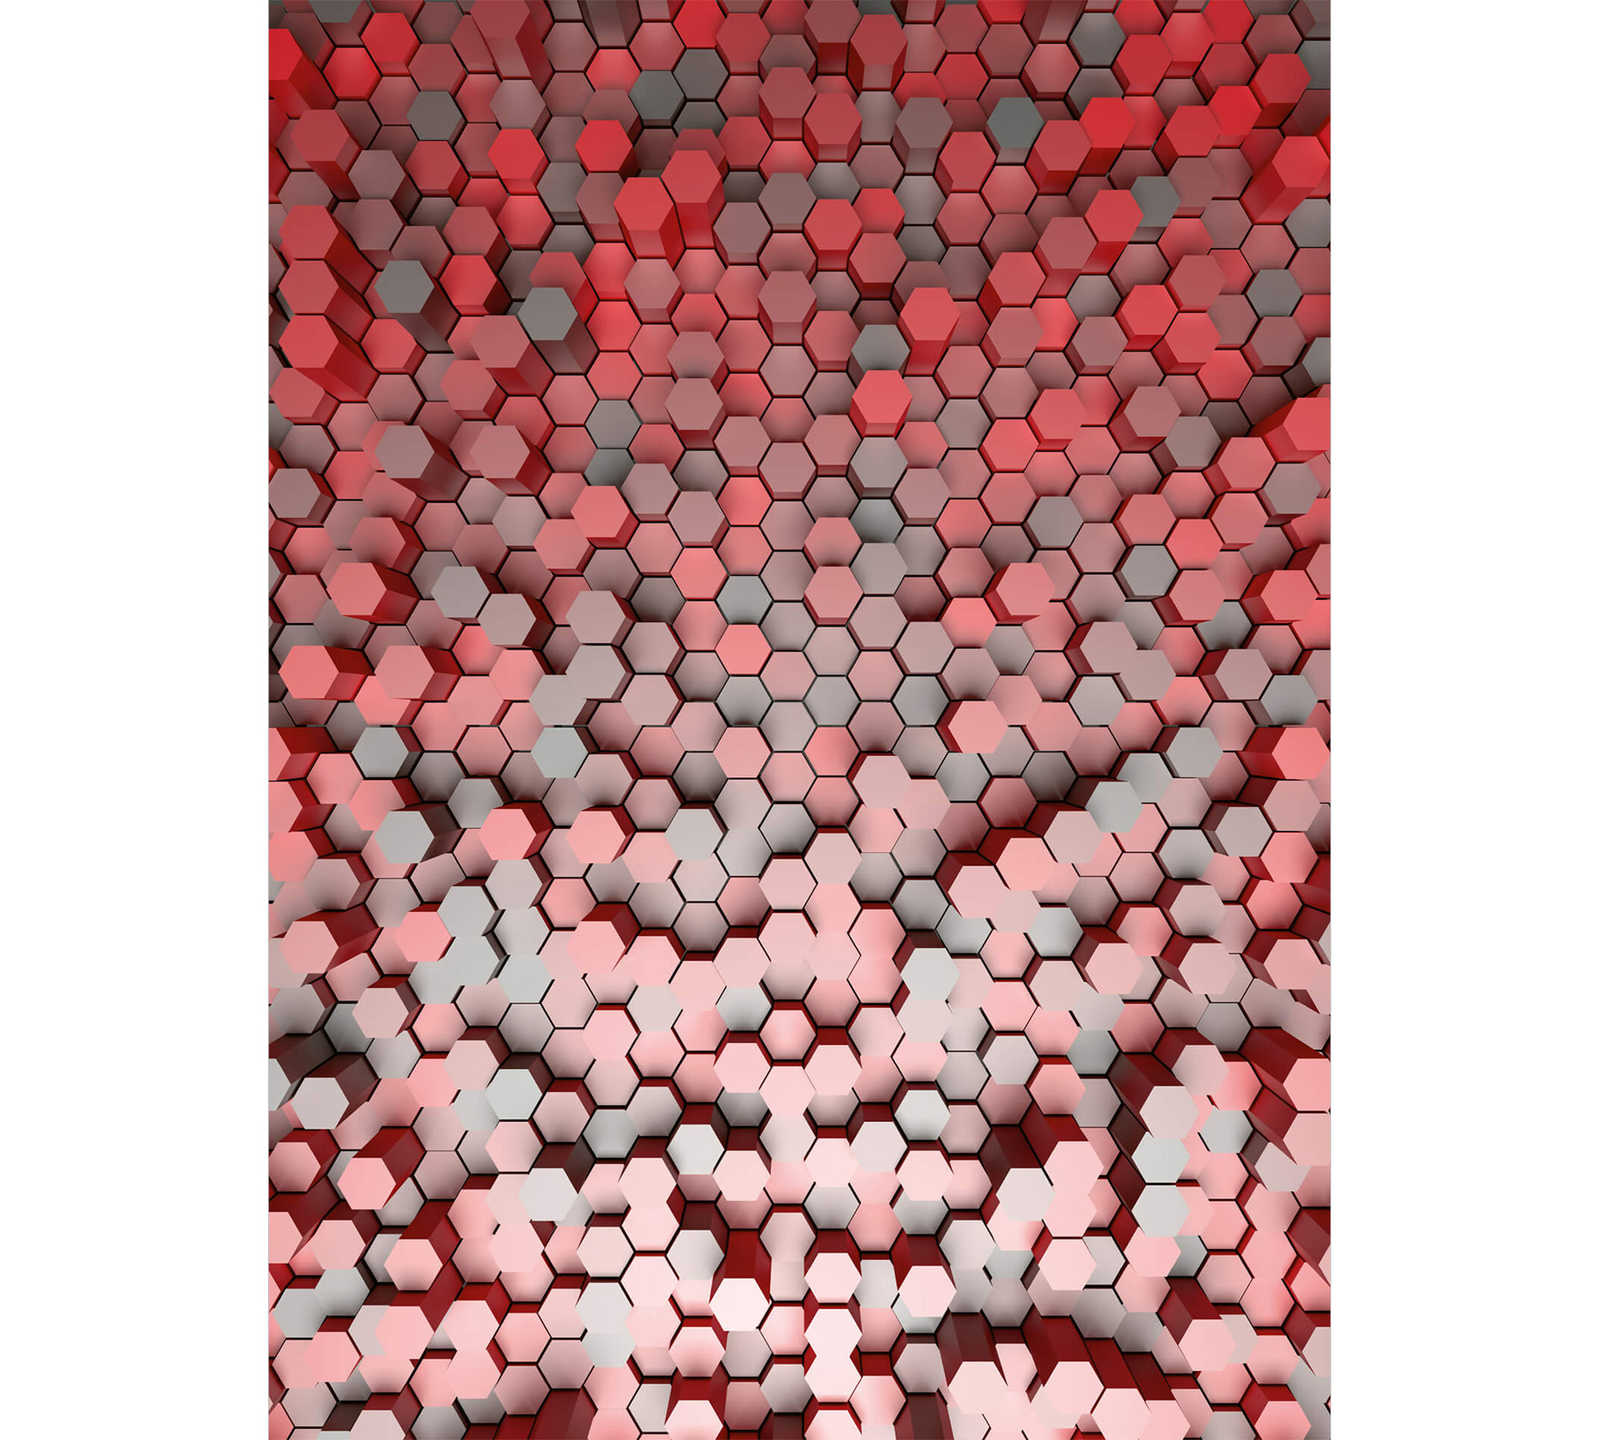         3D Fototapete Hexagon Grafik-Design – Rot, Grau
    